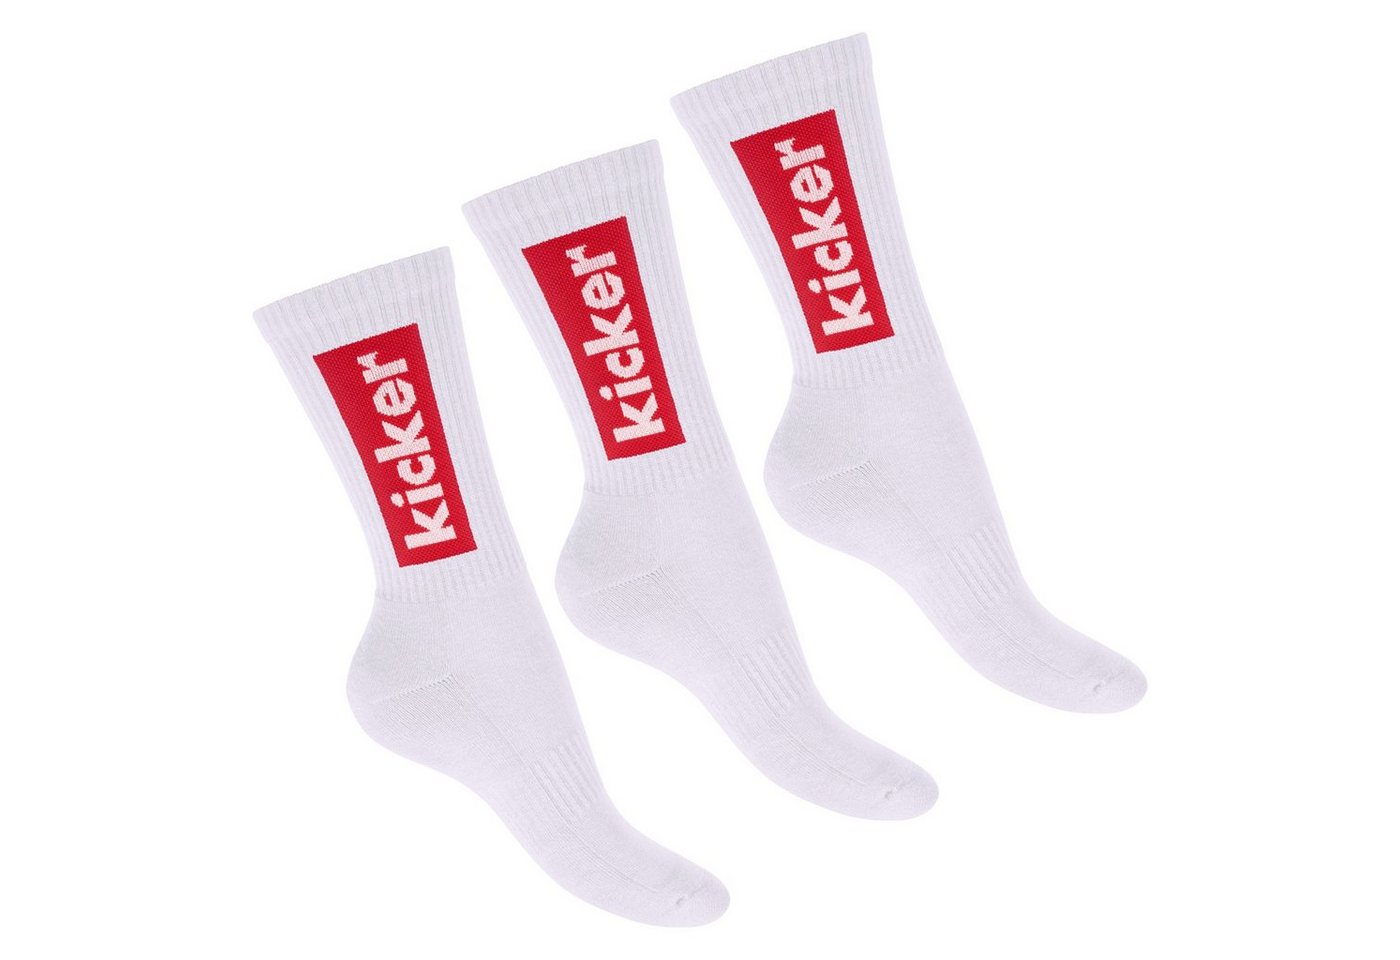 Kicker Tennissocken kicker Damen & Herren Crew Socks (3 Paar) Weiß 35-38 (3-Paar) von Kicker